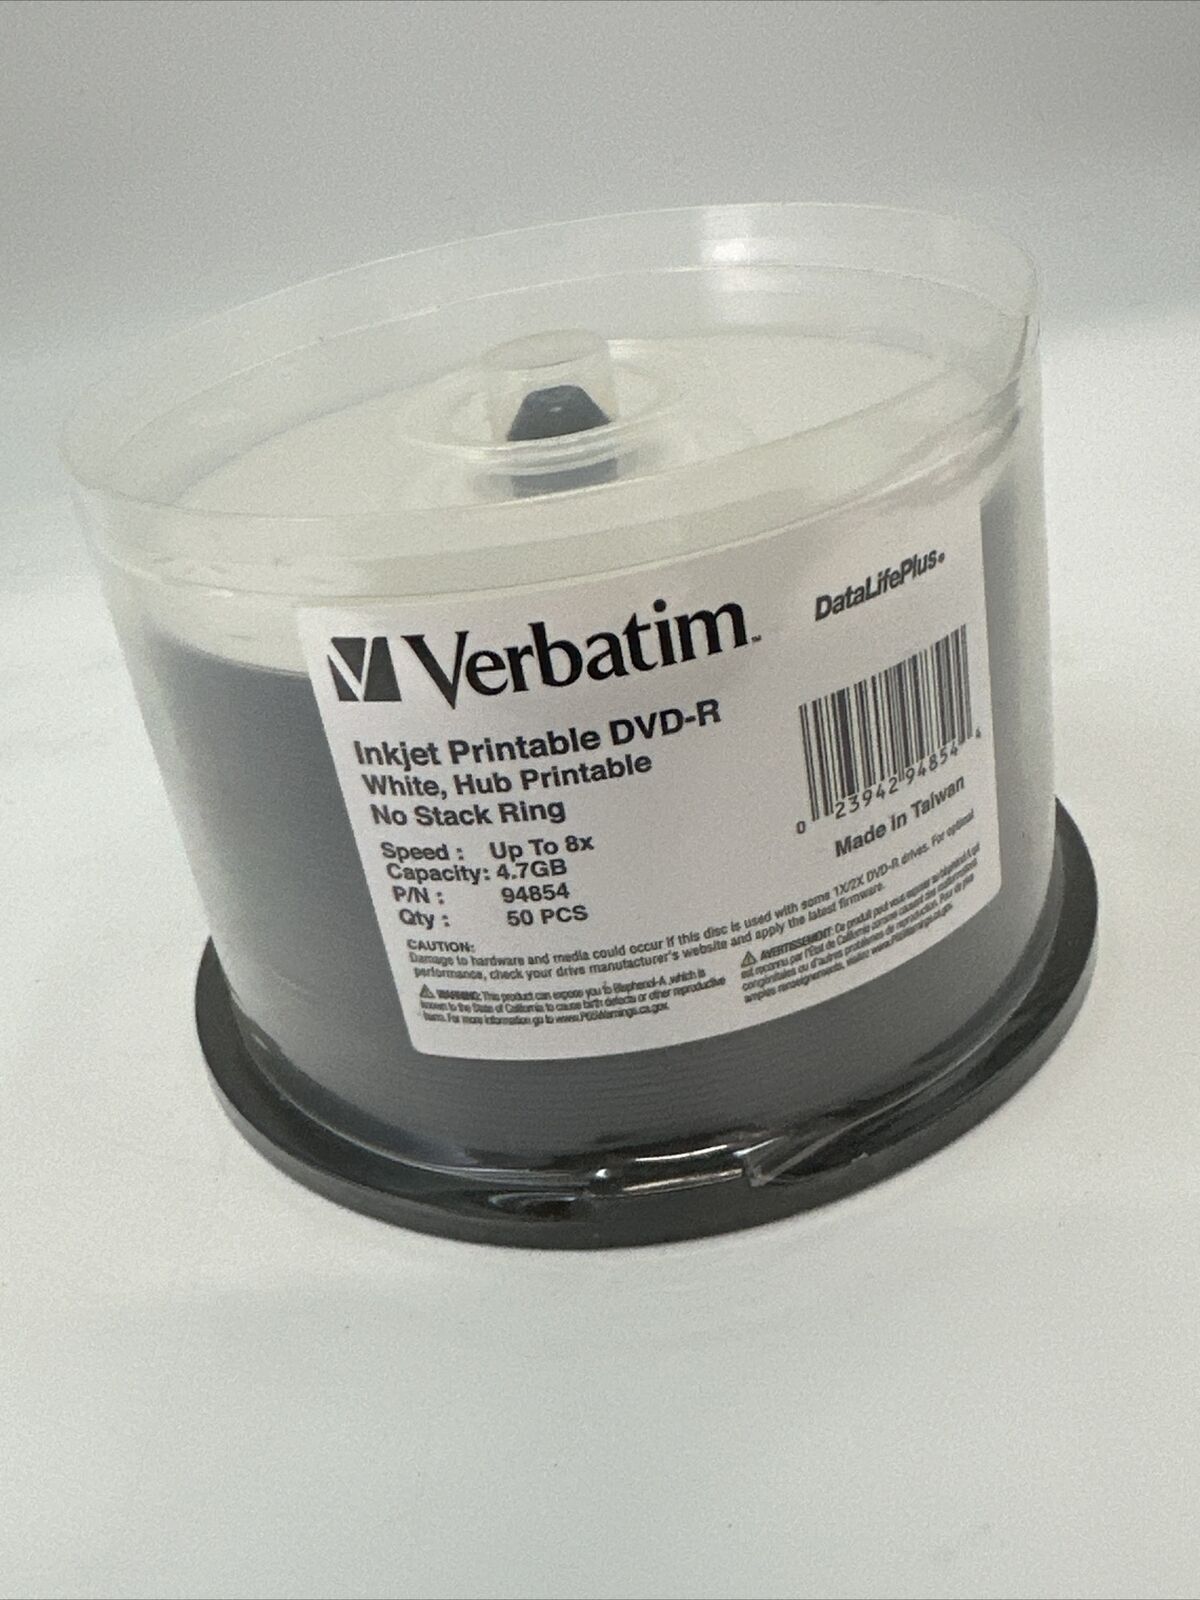 Verbatim DVD-R 8X White Inkjet Hub Printable Media 50 PCS DataLifePlus 94854 NEW